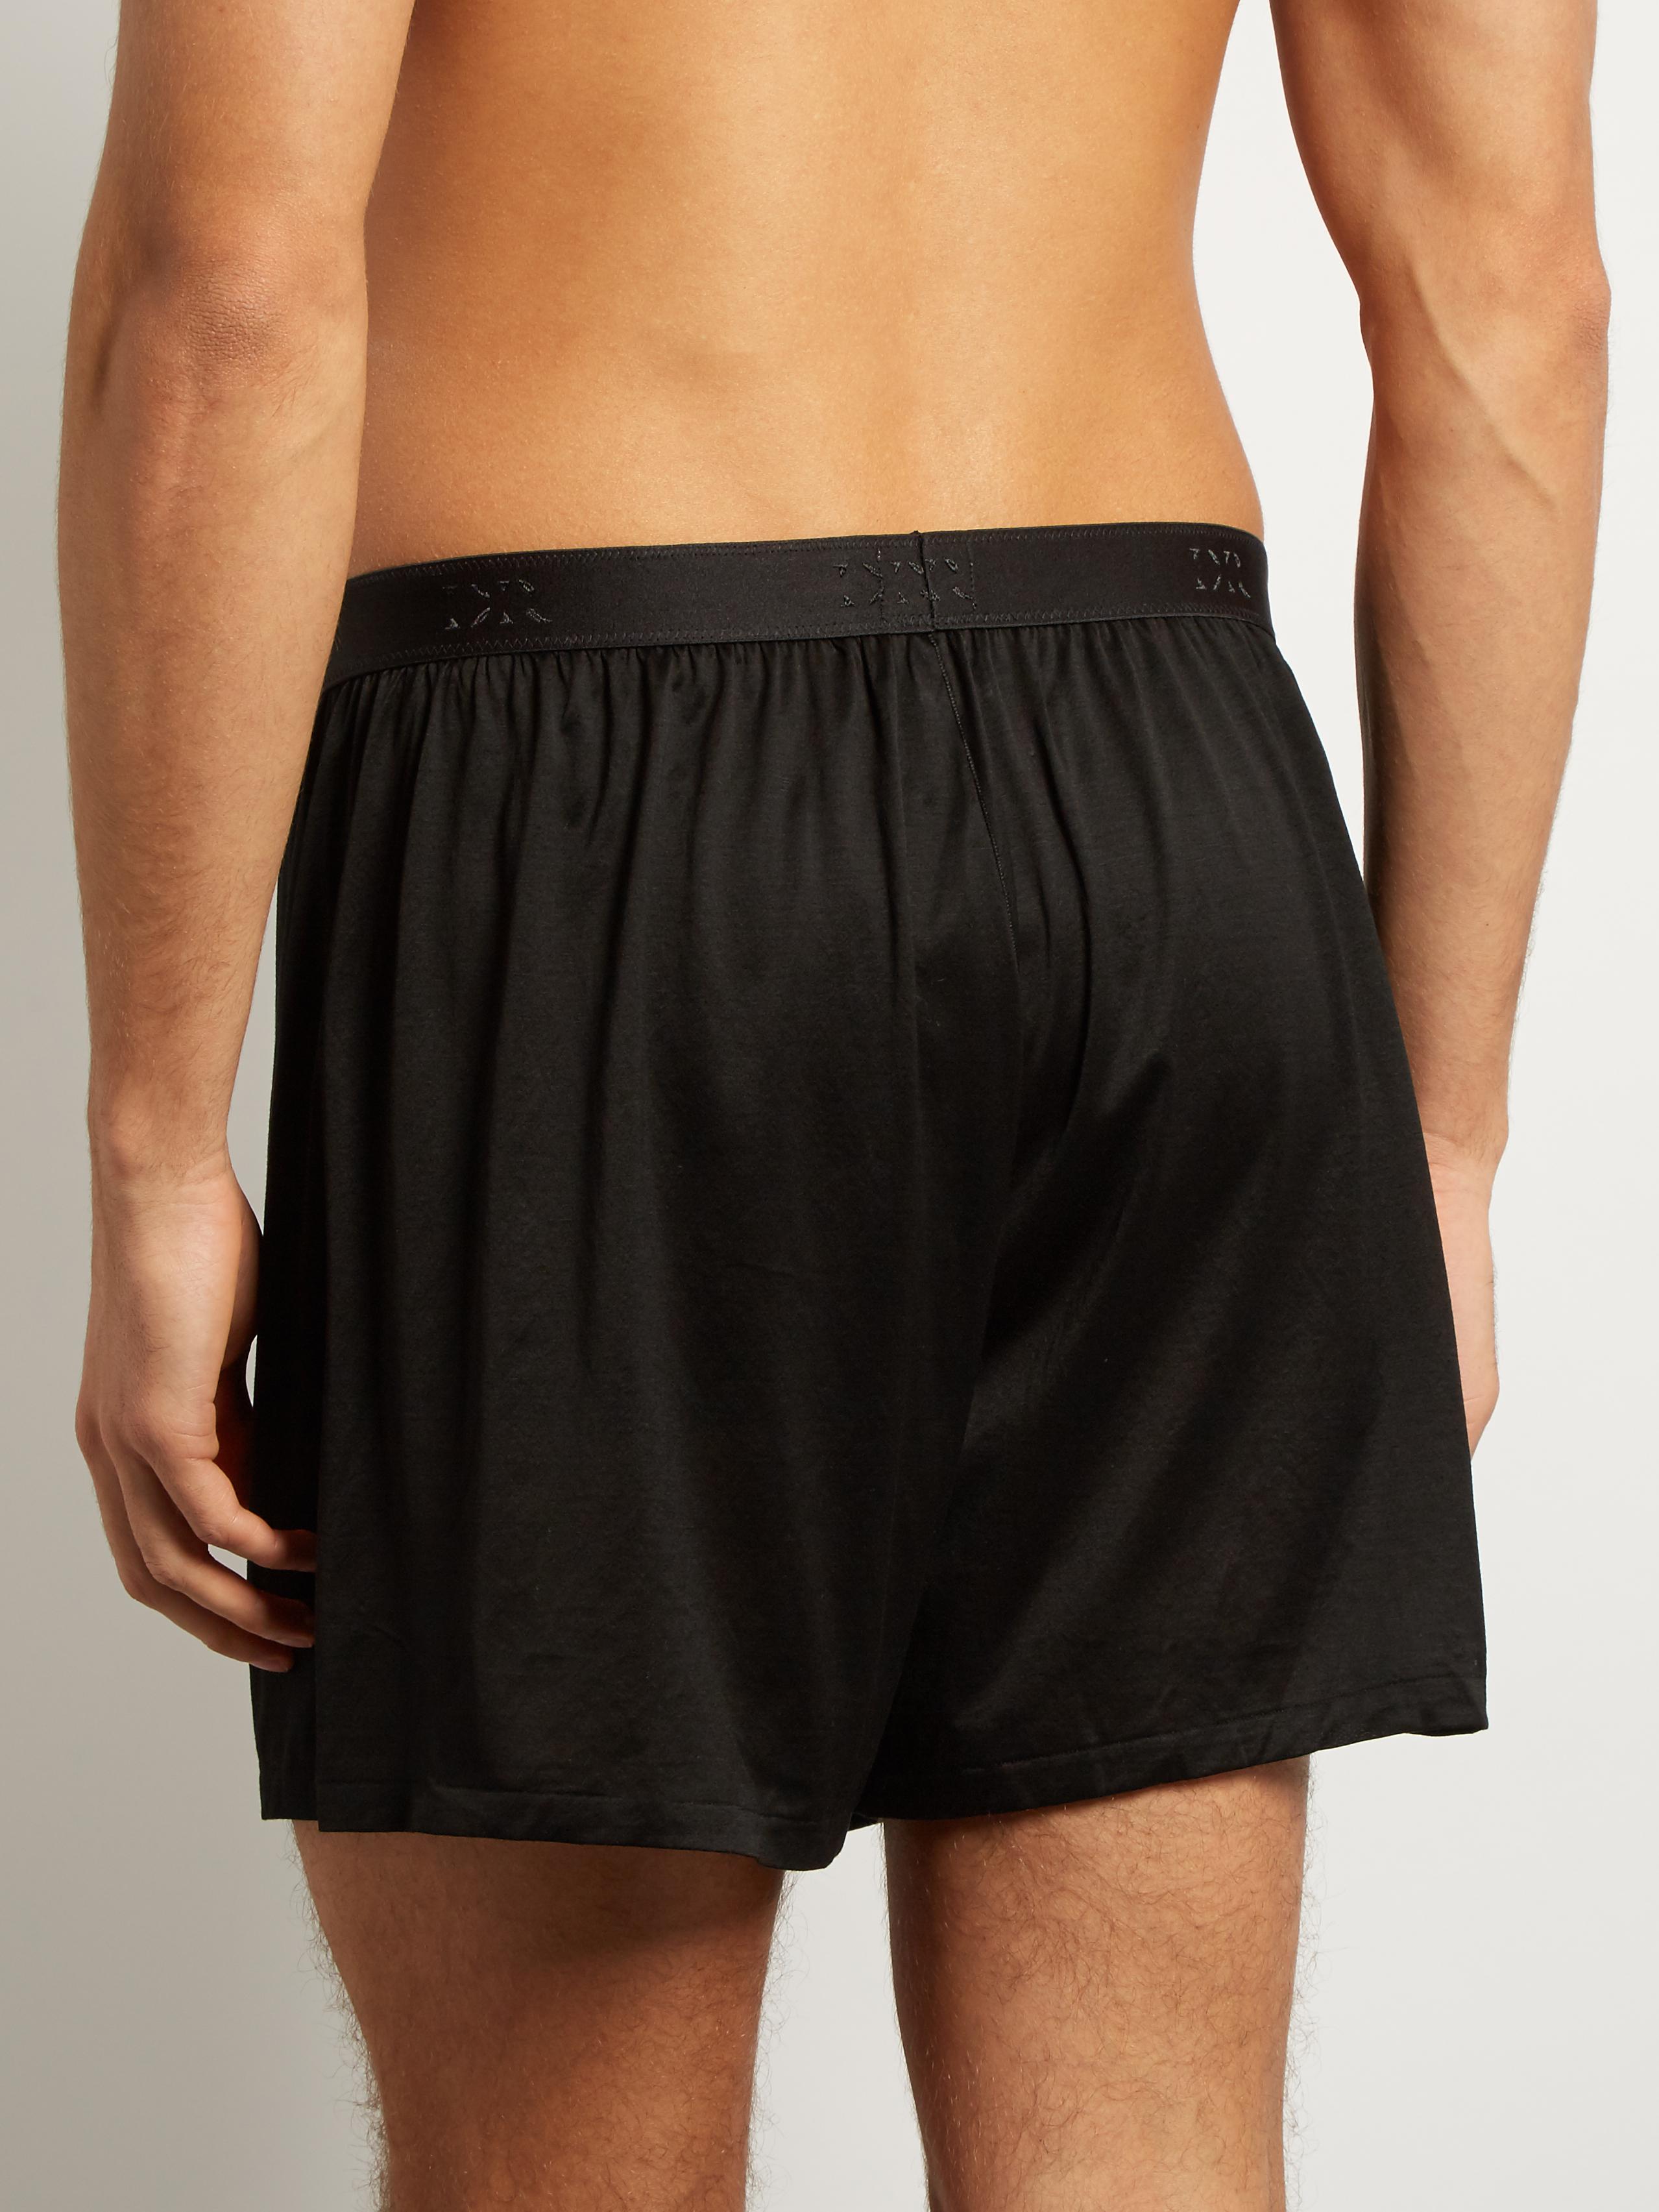 Lyst - Derek Rose Lewis Cotton-jersey Boxer Shorts in Black for Men